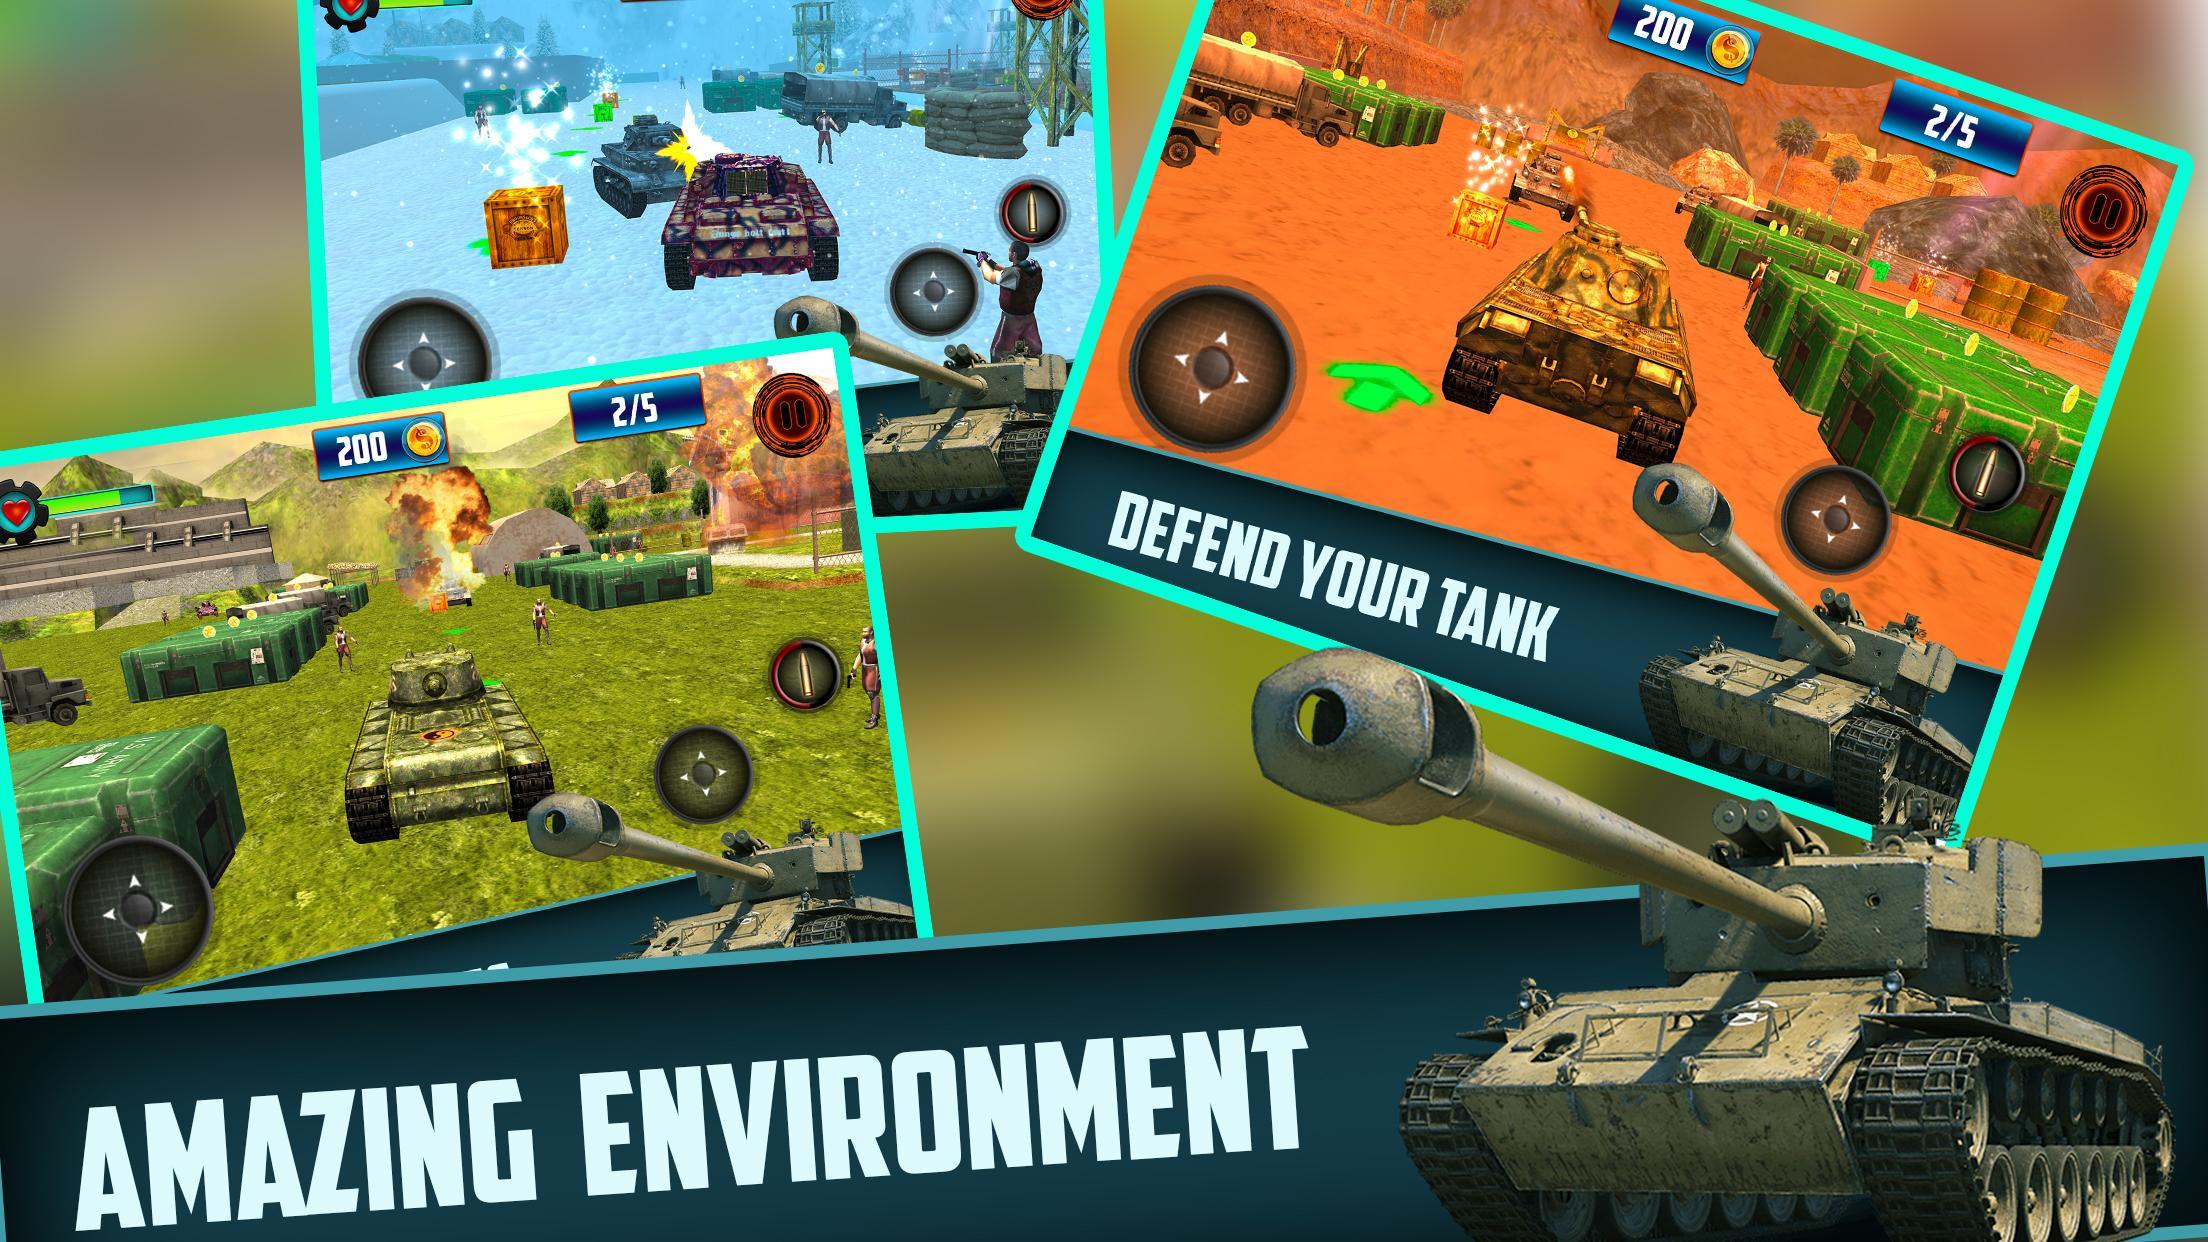 Download do APK de jogos de tanque guerra 3d para Android